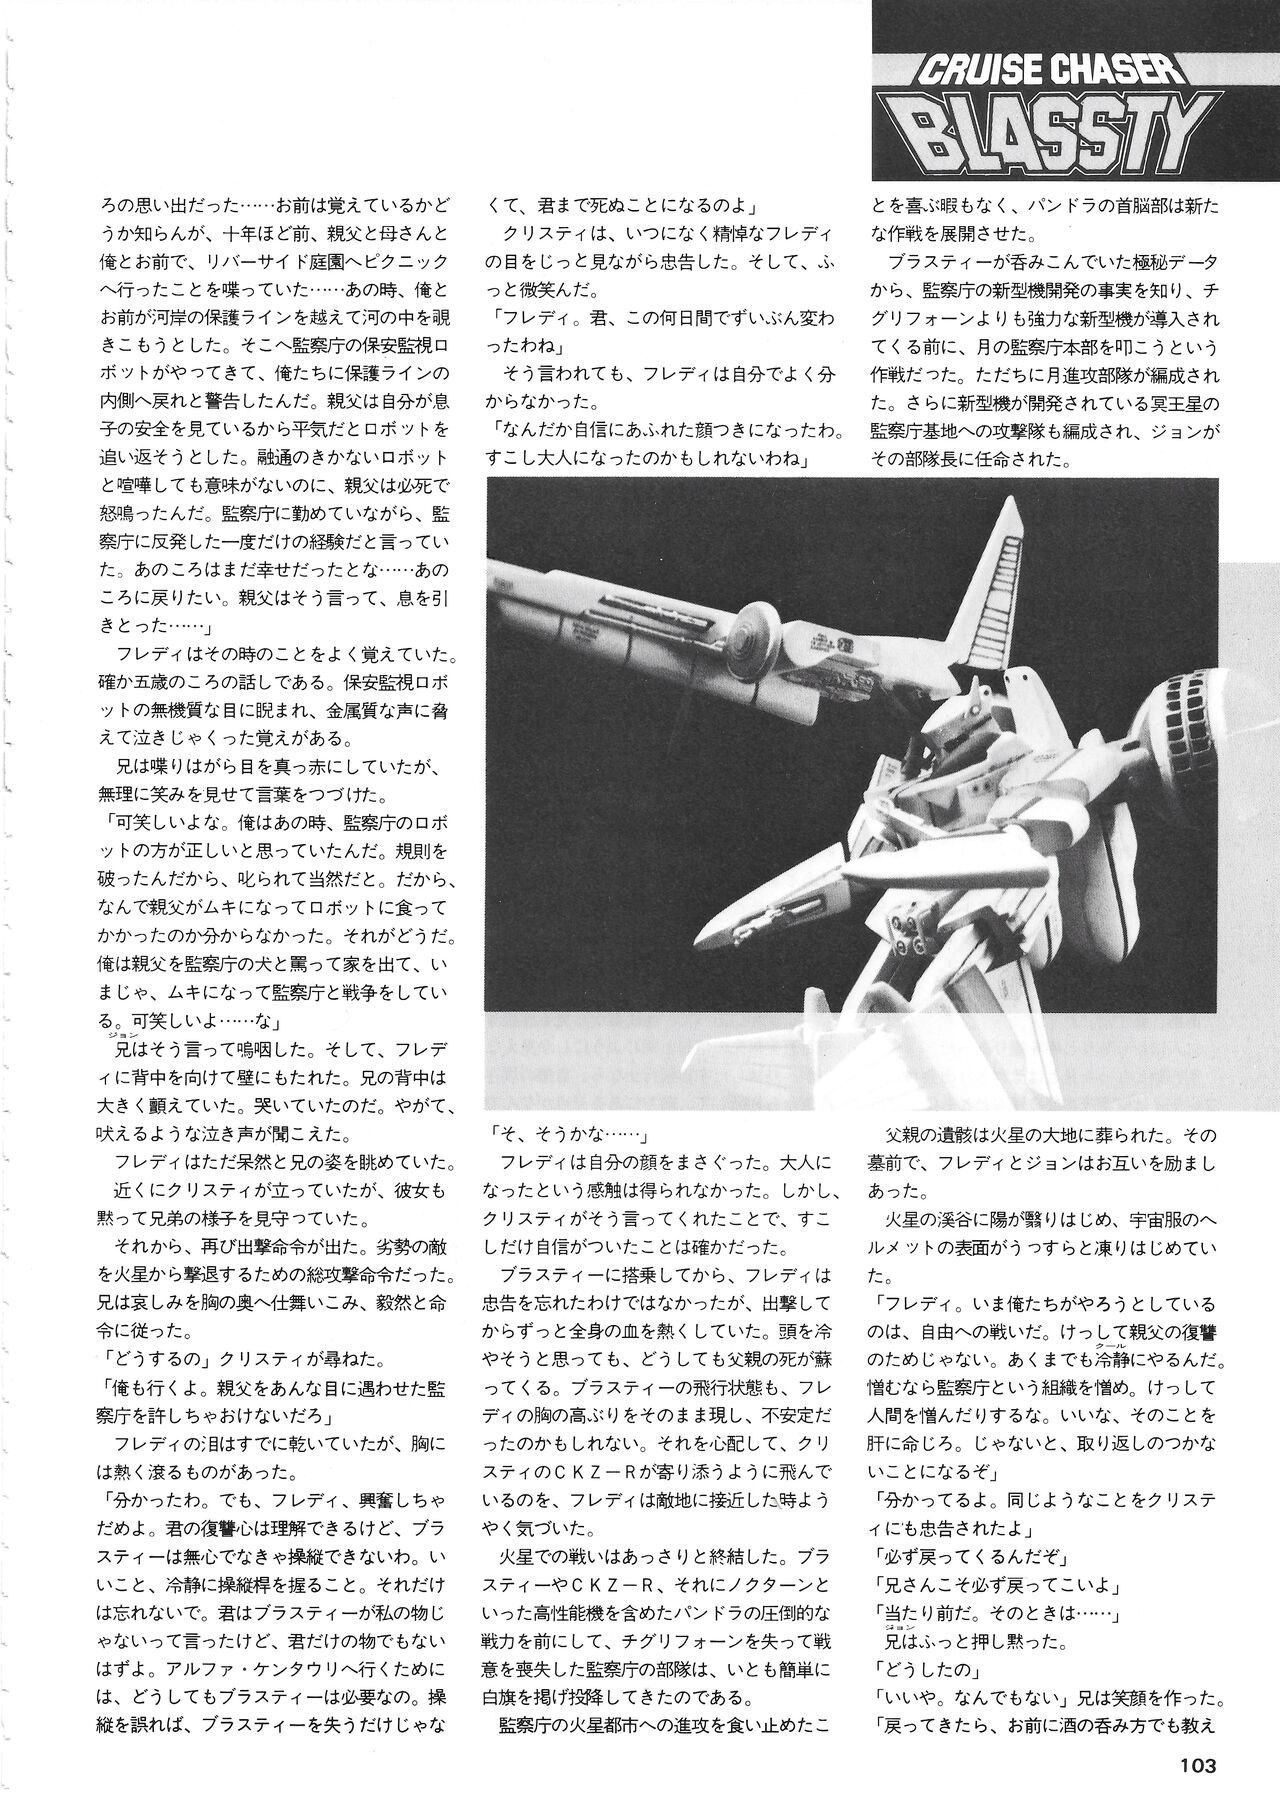 Hobby Japan Magazine 1988 Issue No.224 102